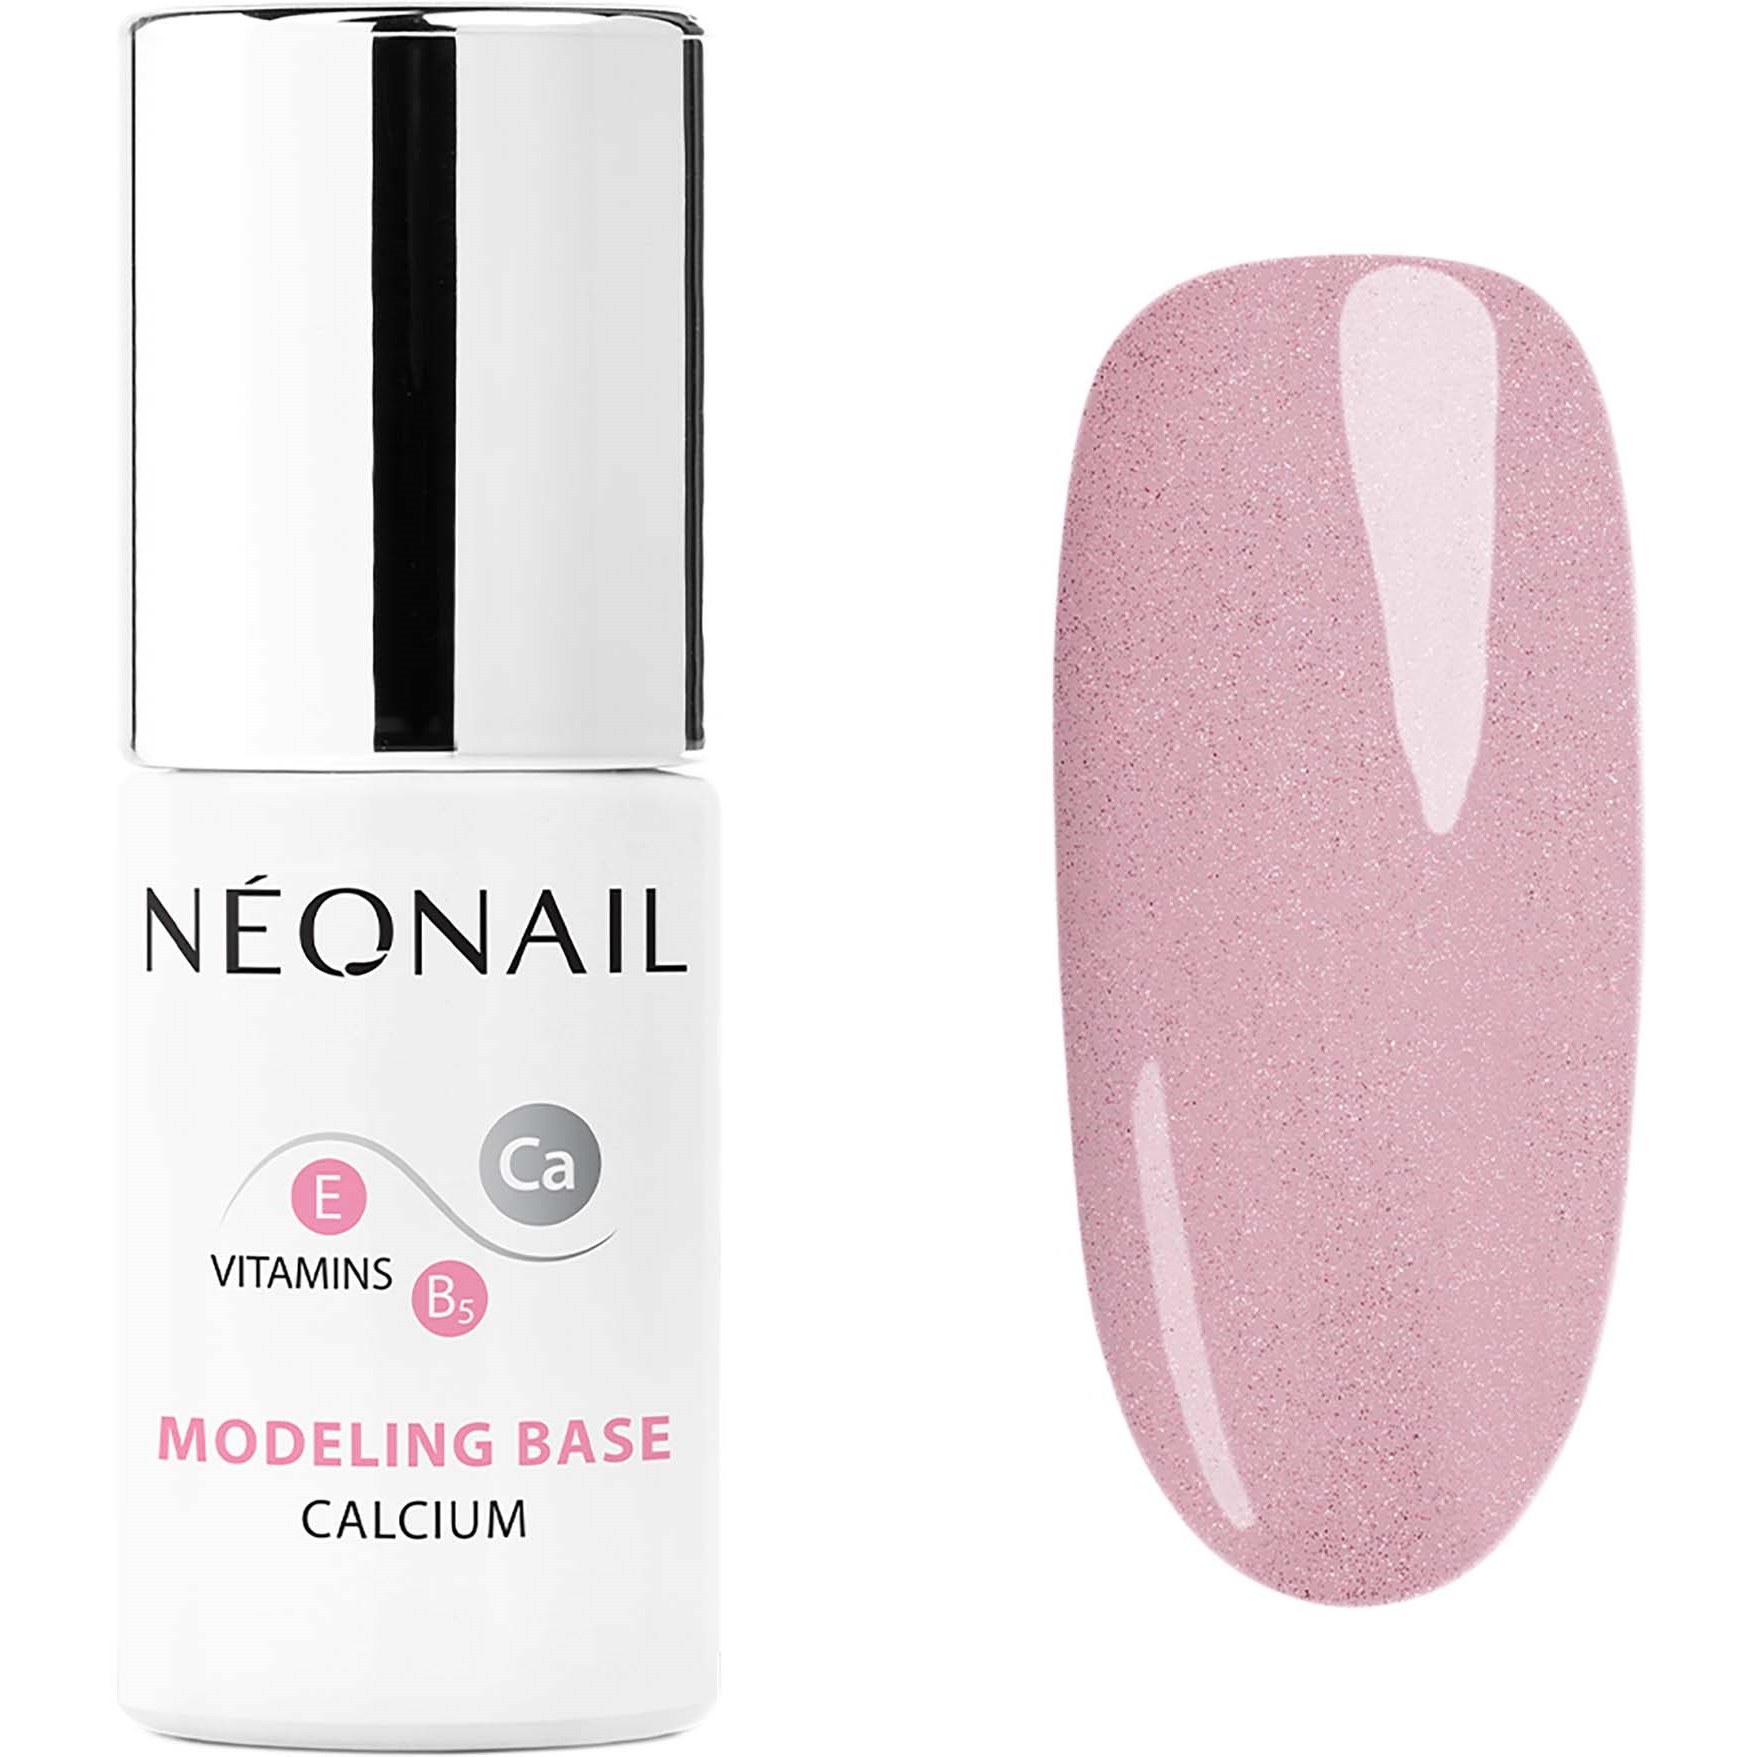 NEONAIL UV Gel Polish Modeling Base Calcium Luminous Pink